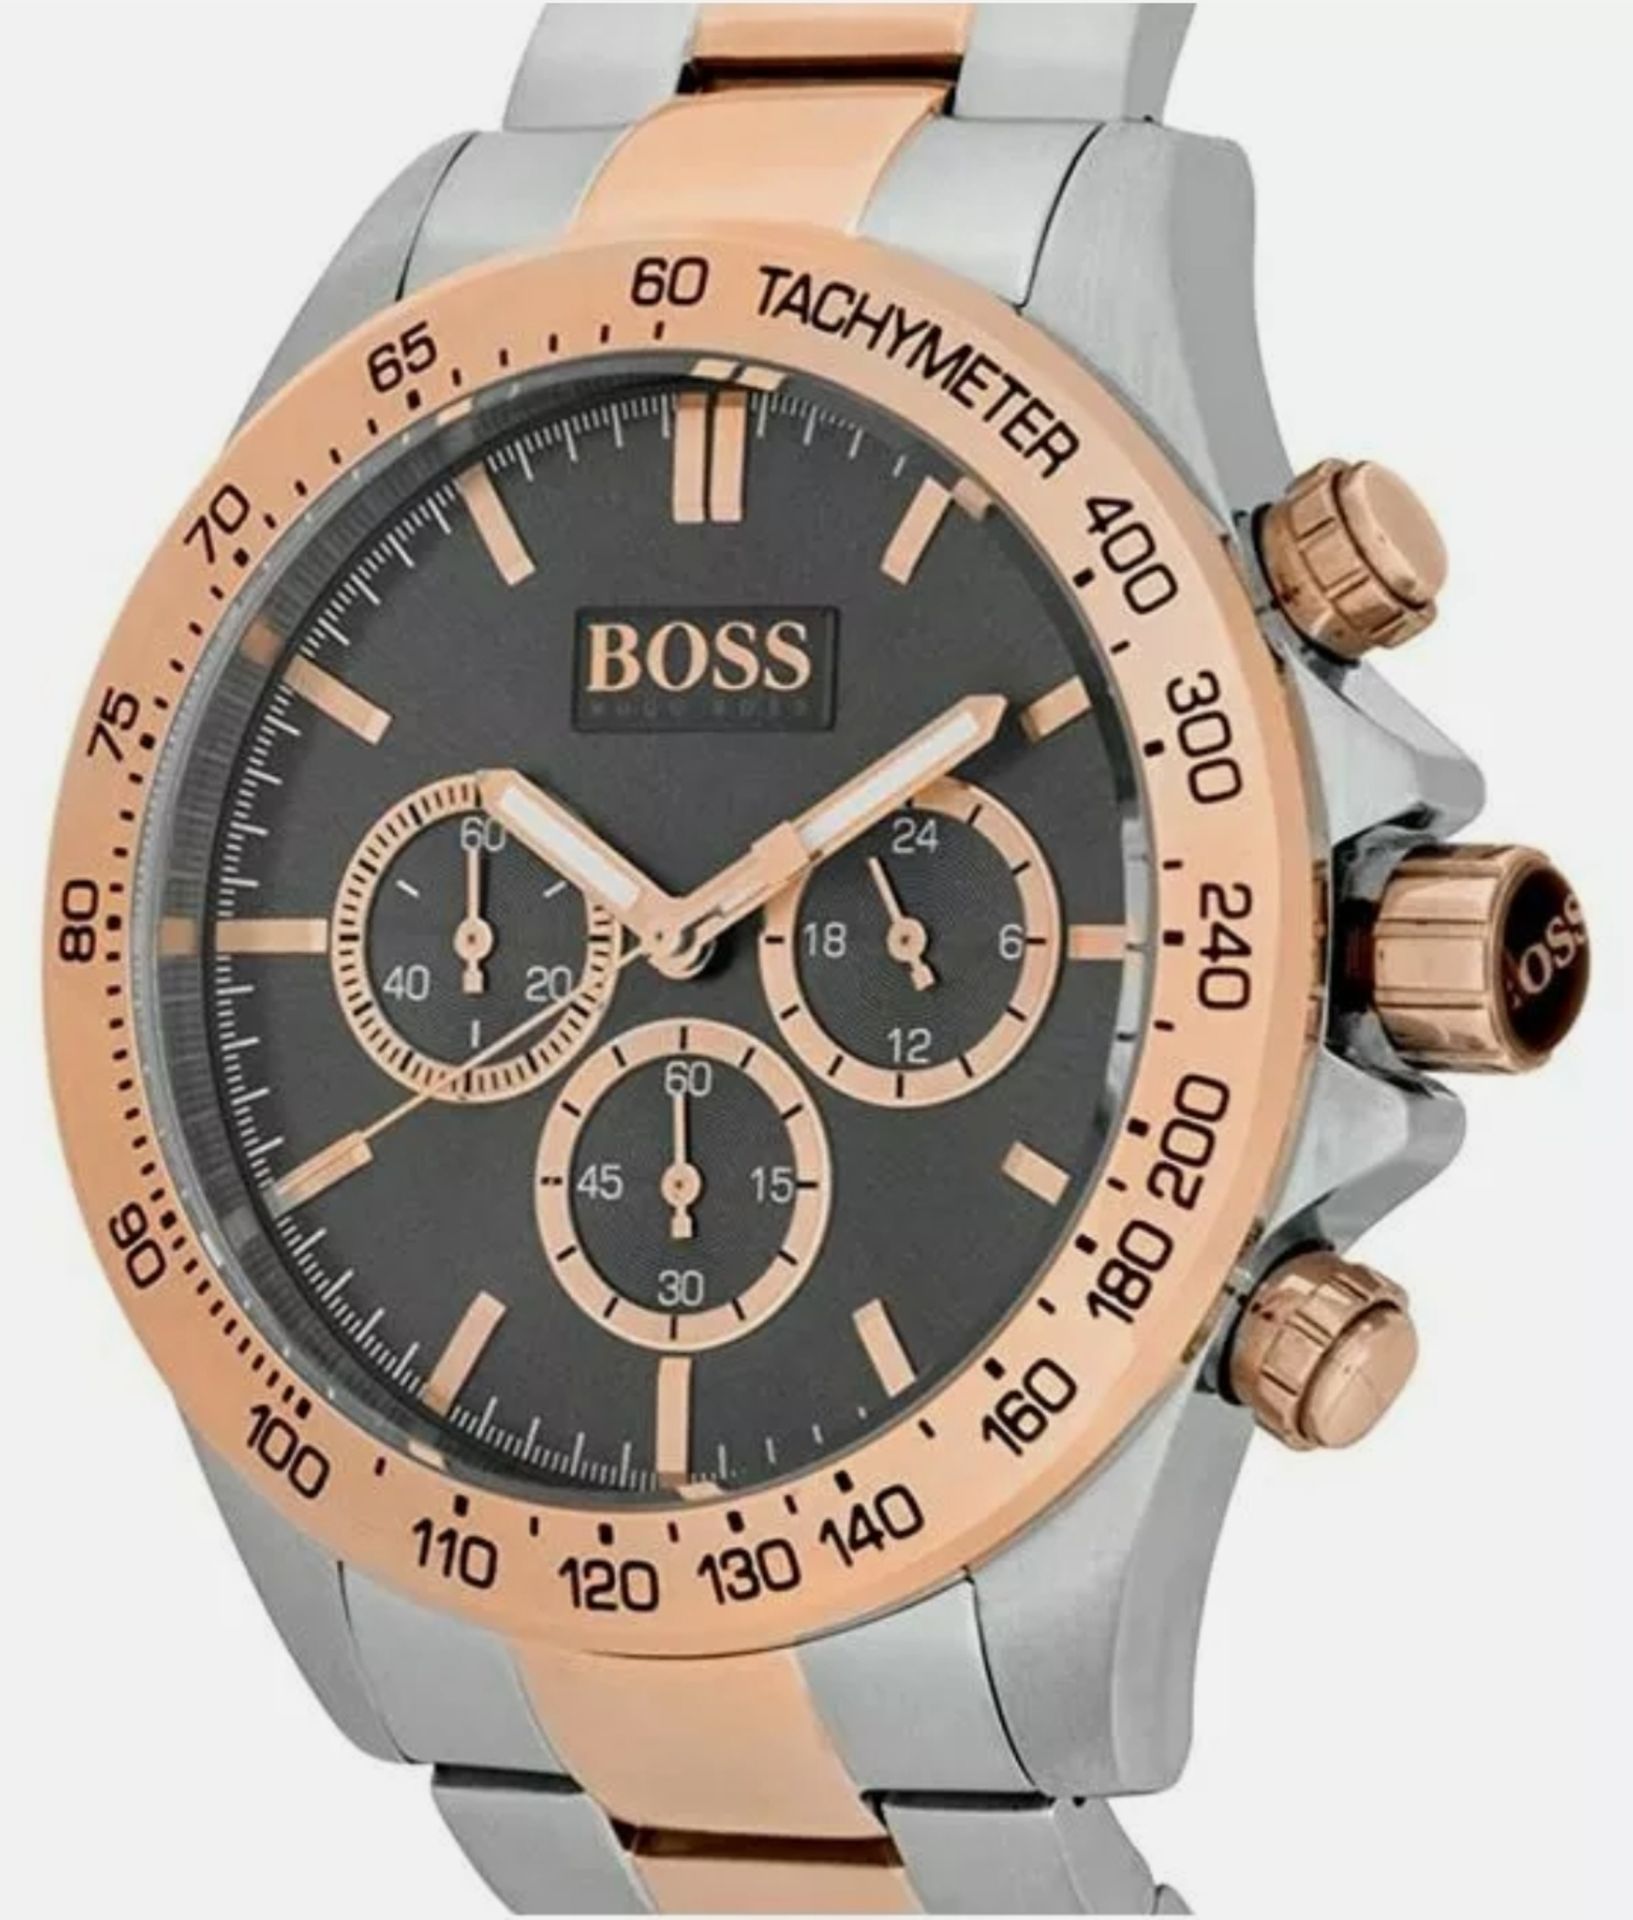 Hugo Boss 1513339 Men's Ikon Two Tone Rose Gold & Silver Chronograph Watch - Image 5 of 7